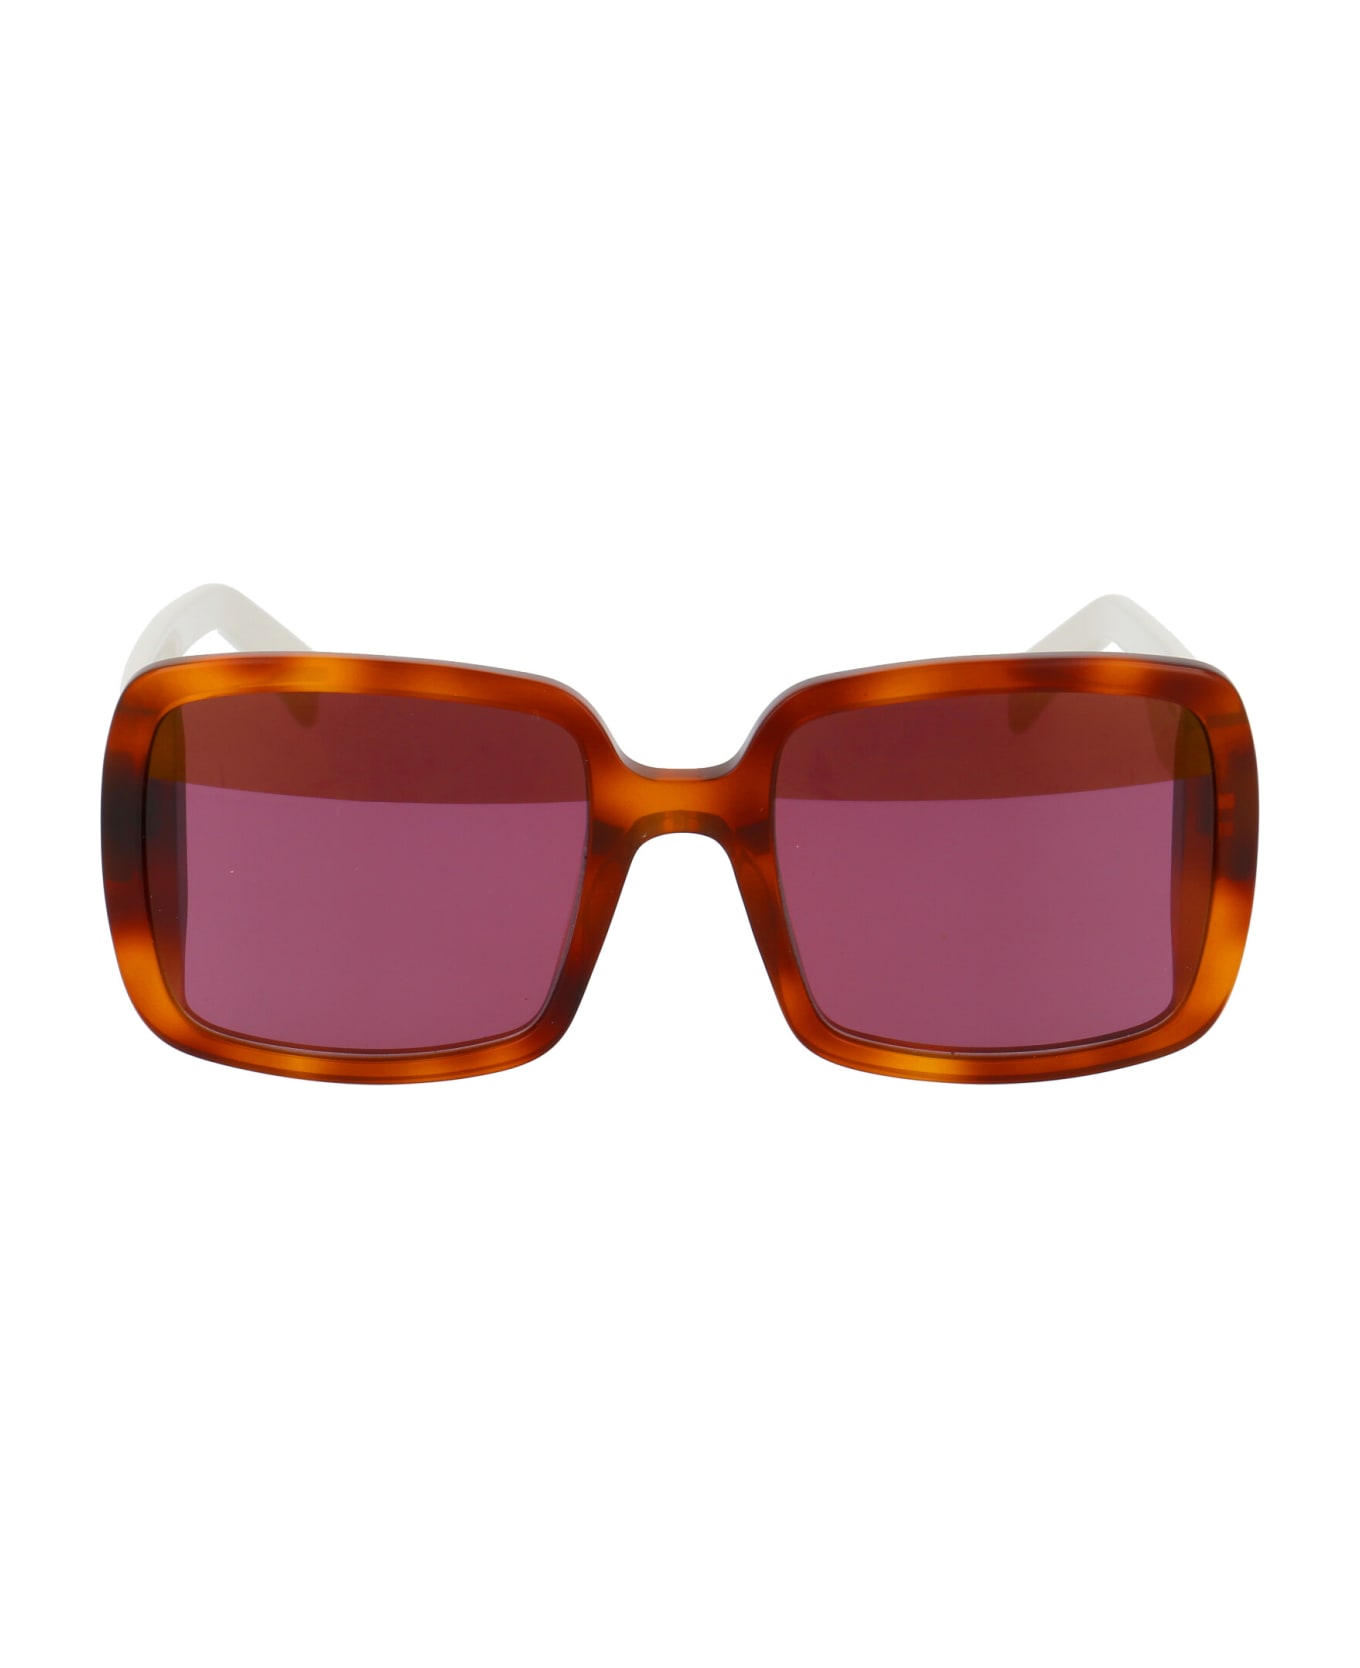 Marni Eyewear Me633s Sunglasses - 219 TORTOISE